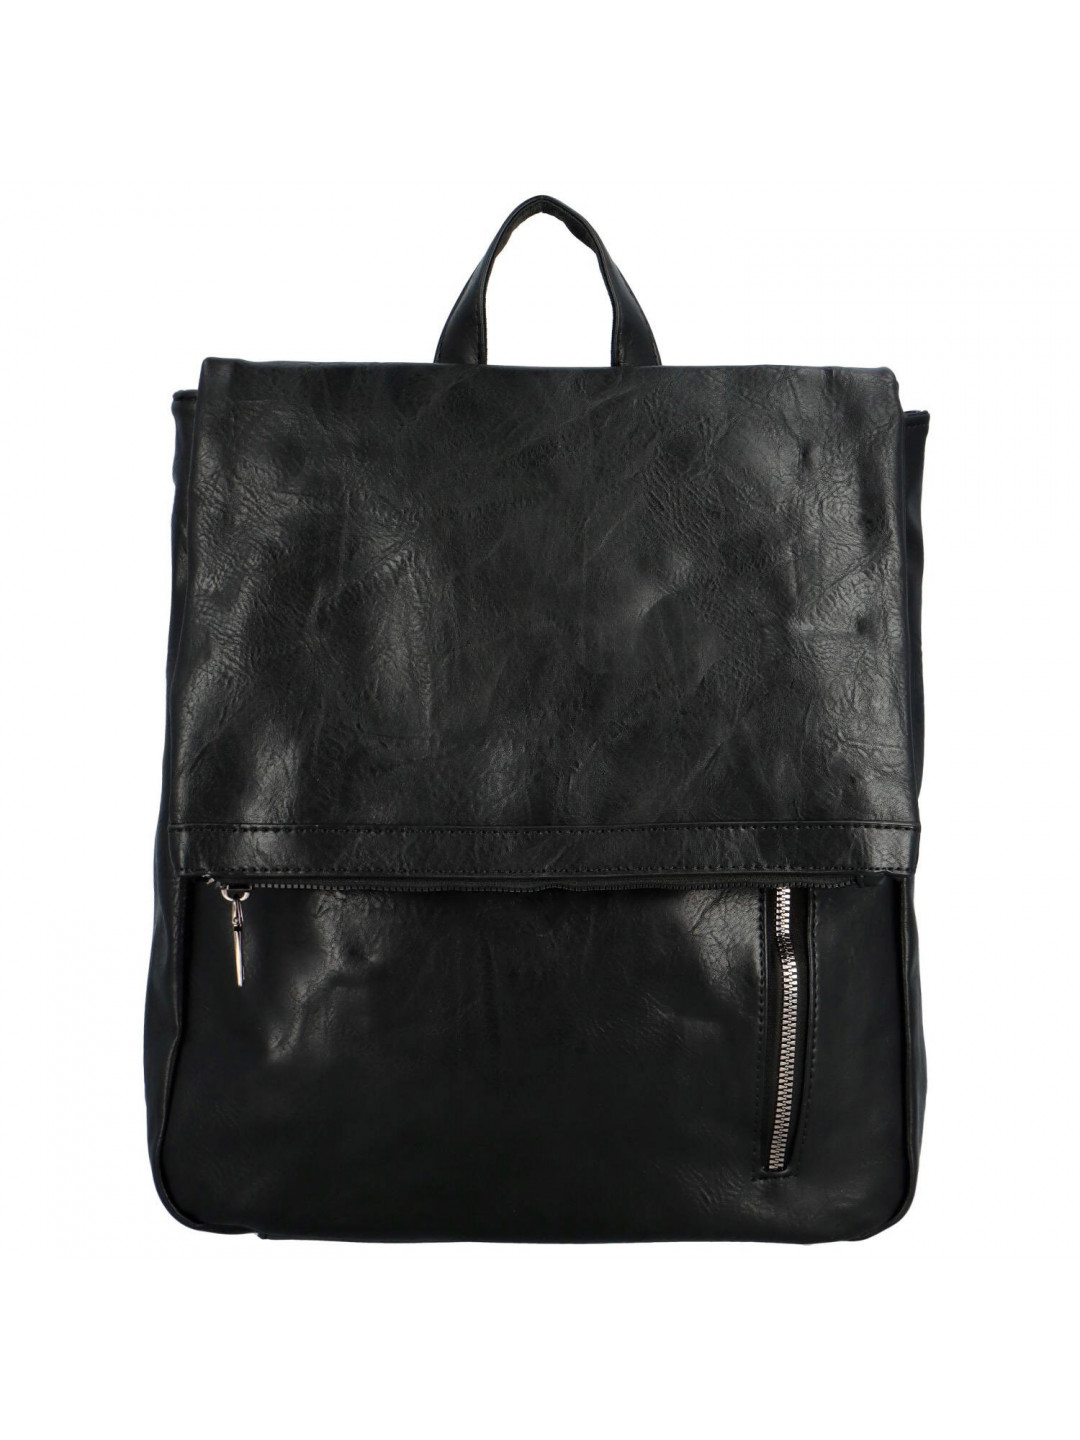 Trendy dámský koženkový kabelko-batůžek Floras černá